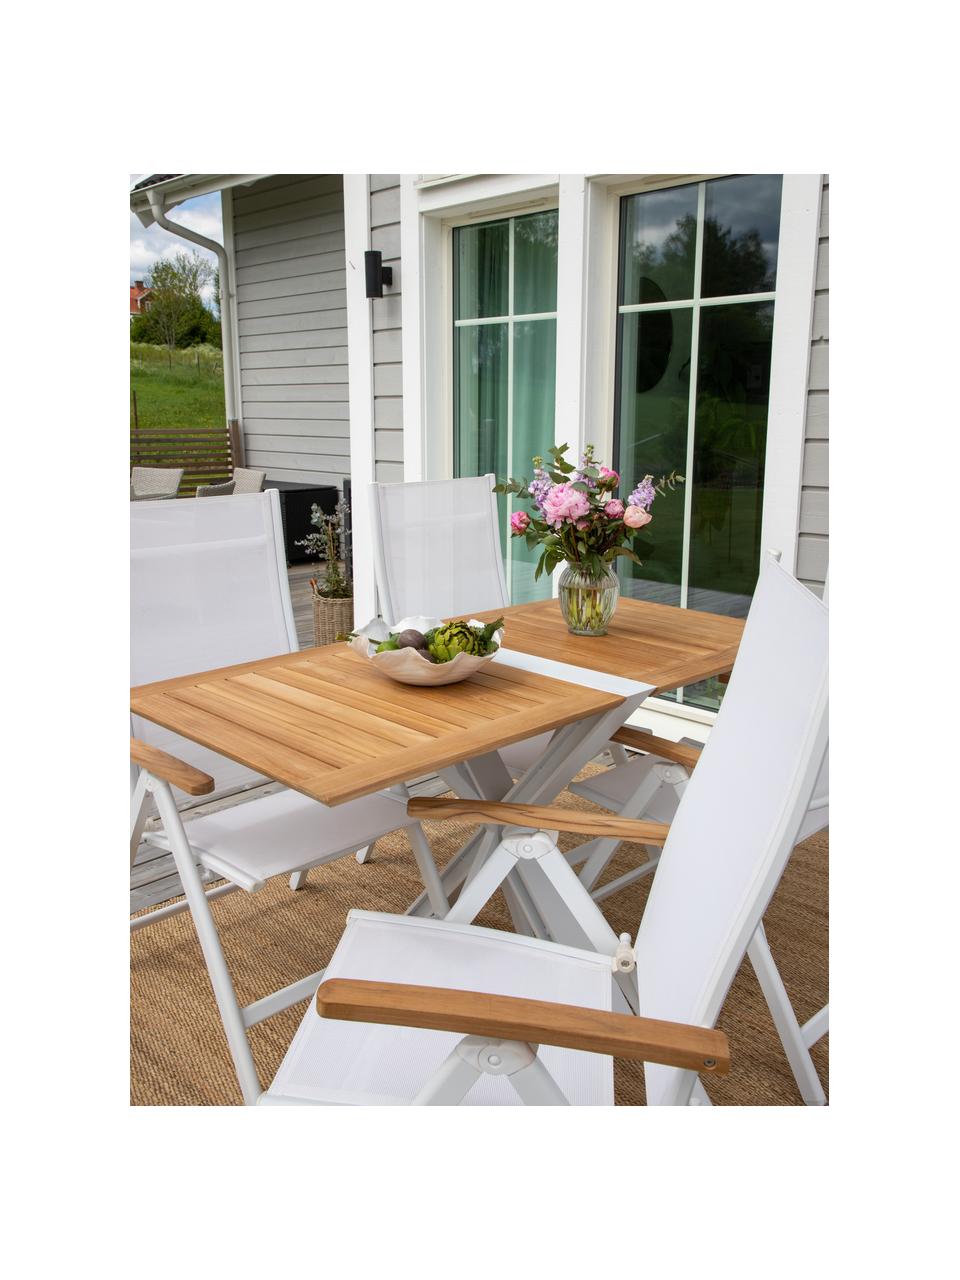 Skládací zahradní židle Panama, Bílá, teakové dřevo, Š 58 cm, H 75 cm